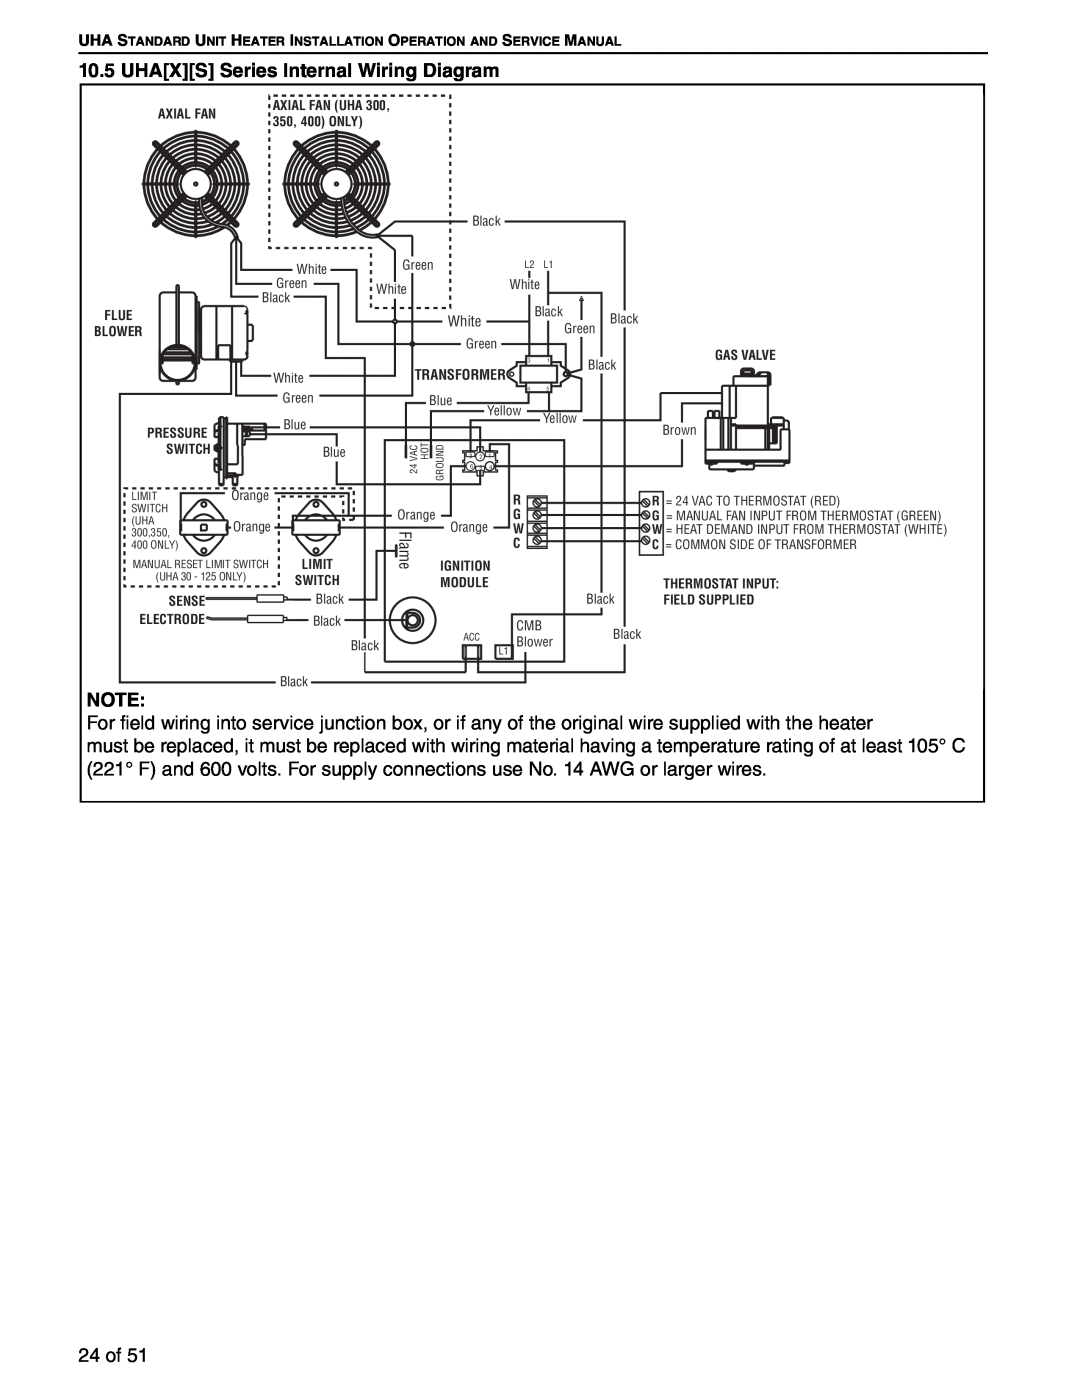 Roberts Gorden 200, 350, 150, 400, 250, 300, 225, 175 service manual UHAXS Series Internal Wiring Diagram 